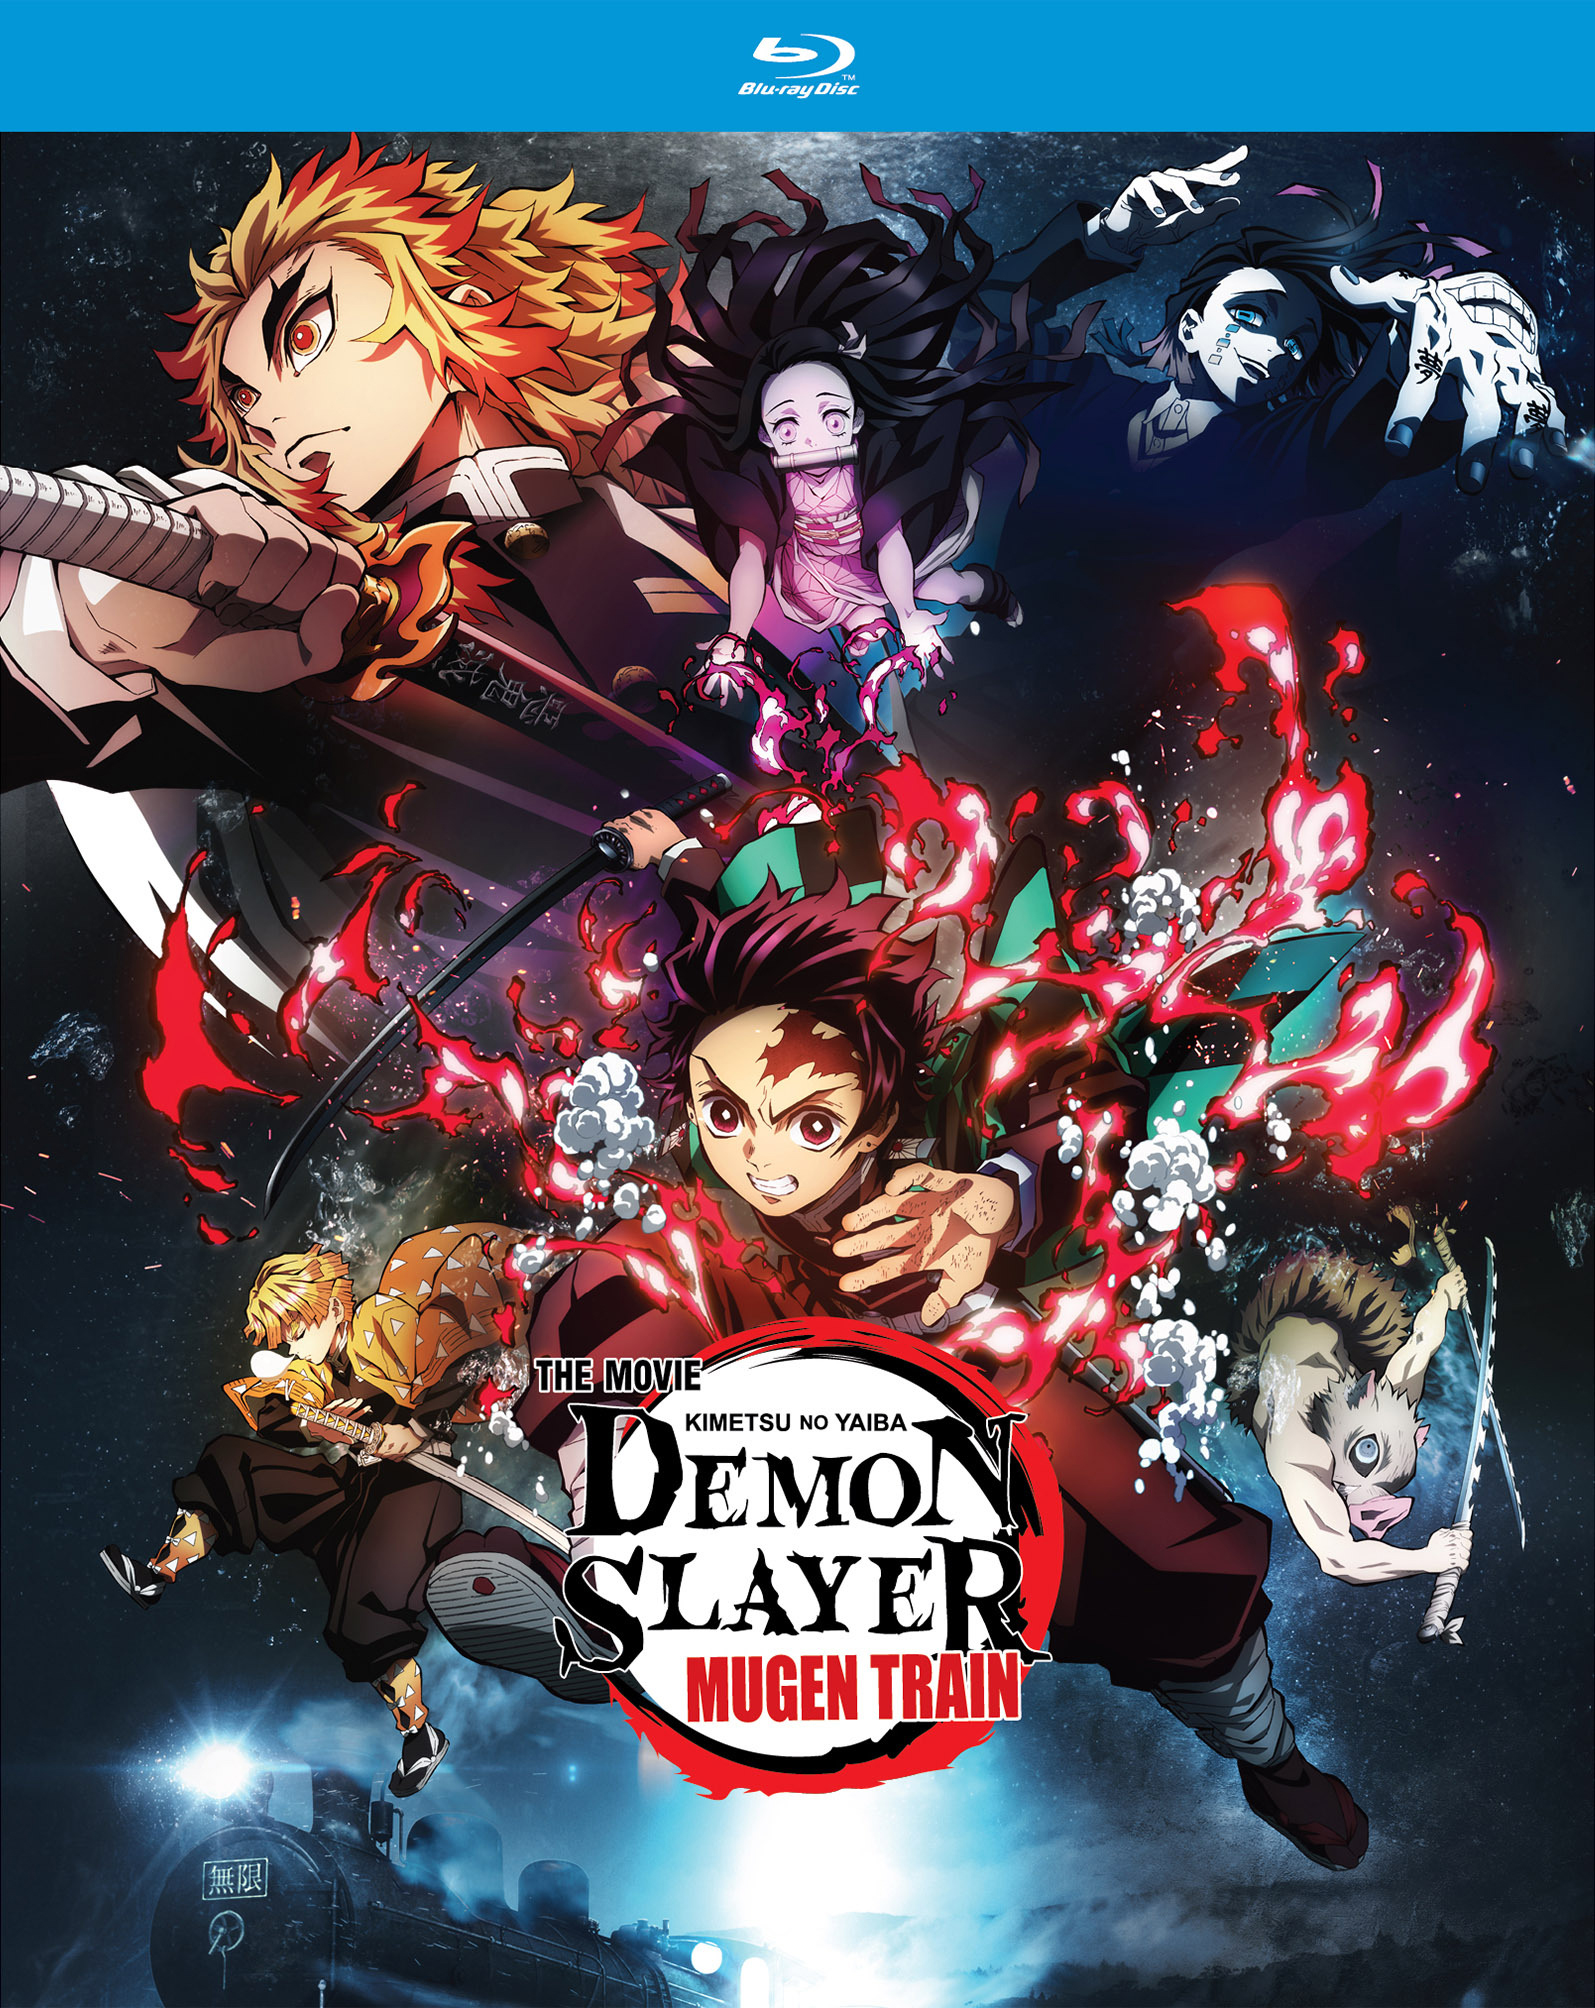 IMAX Screening visual by Funimation for Demon Slayer:Kimetsu no yaiba  (Pre-sale up in USA & Latin countries) : r/anime